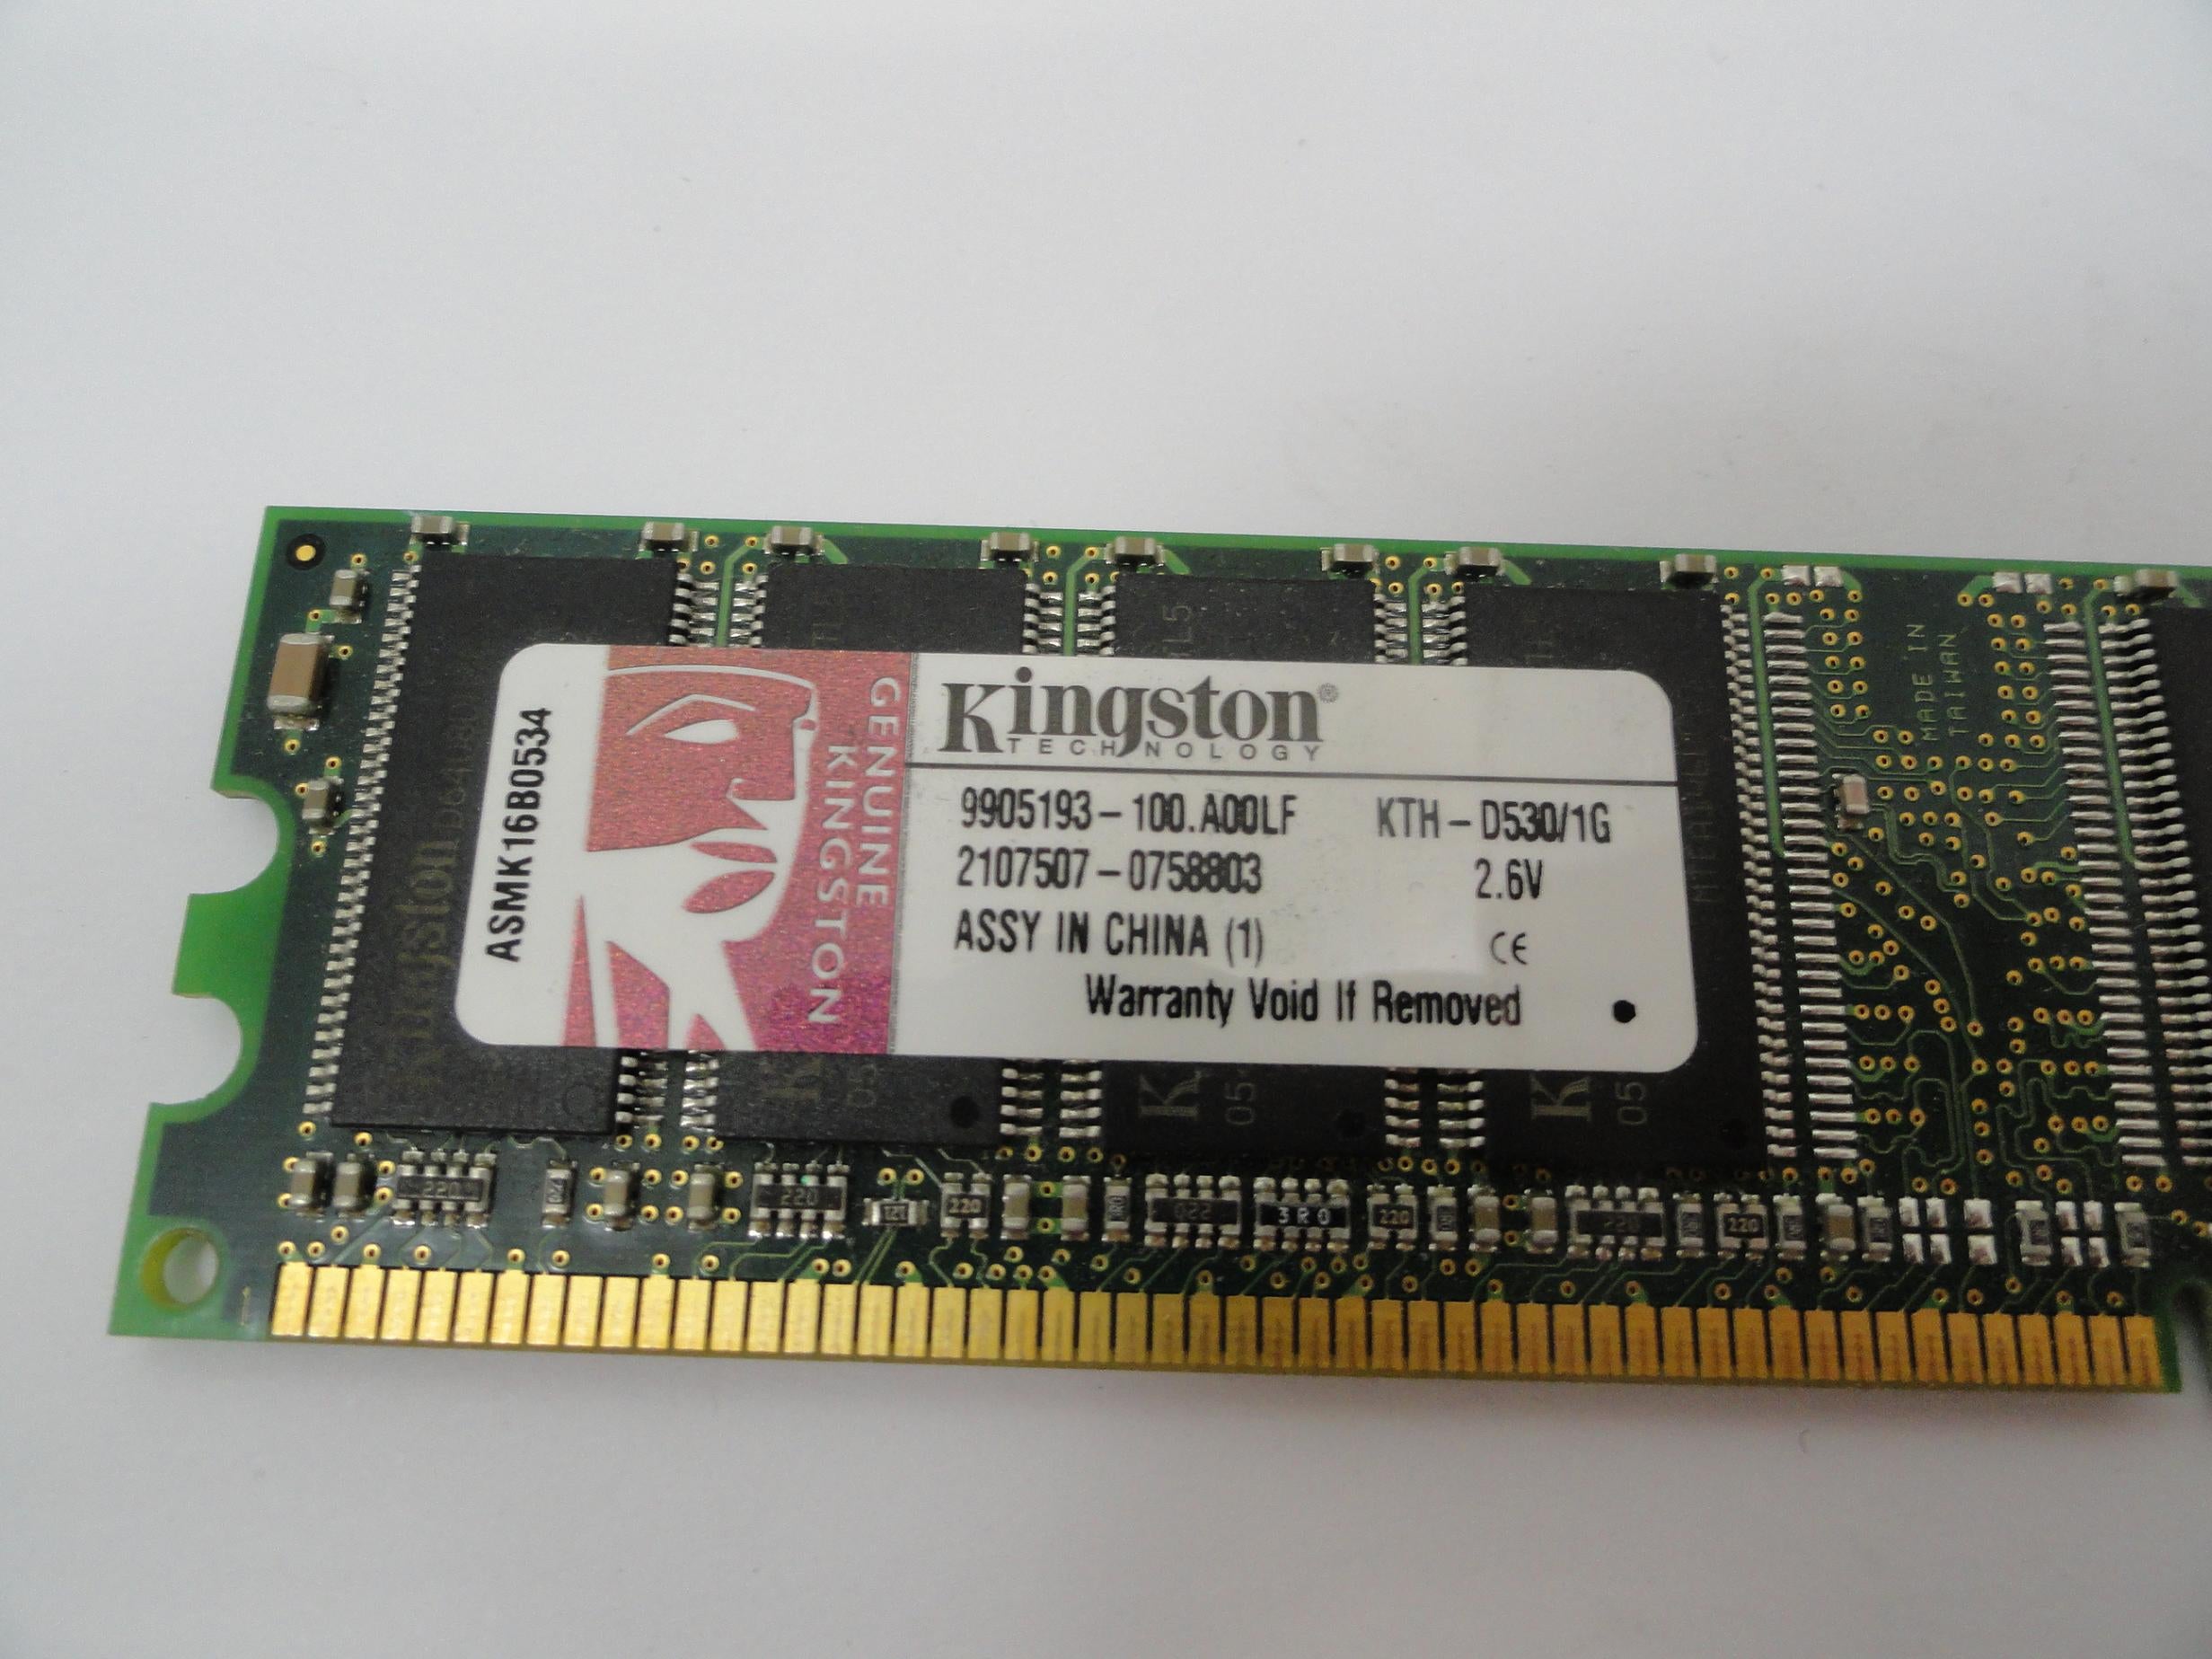 KTH-D530/1G - Kingston 1Gb DDR PC-3200 184-Pin DIMM RAM Module - Refurbished